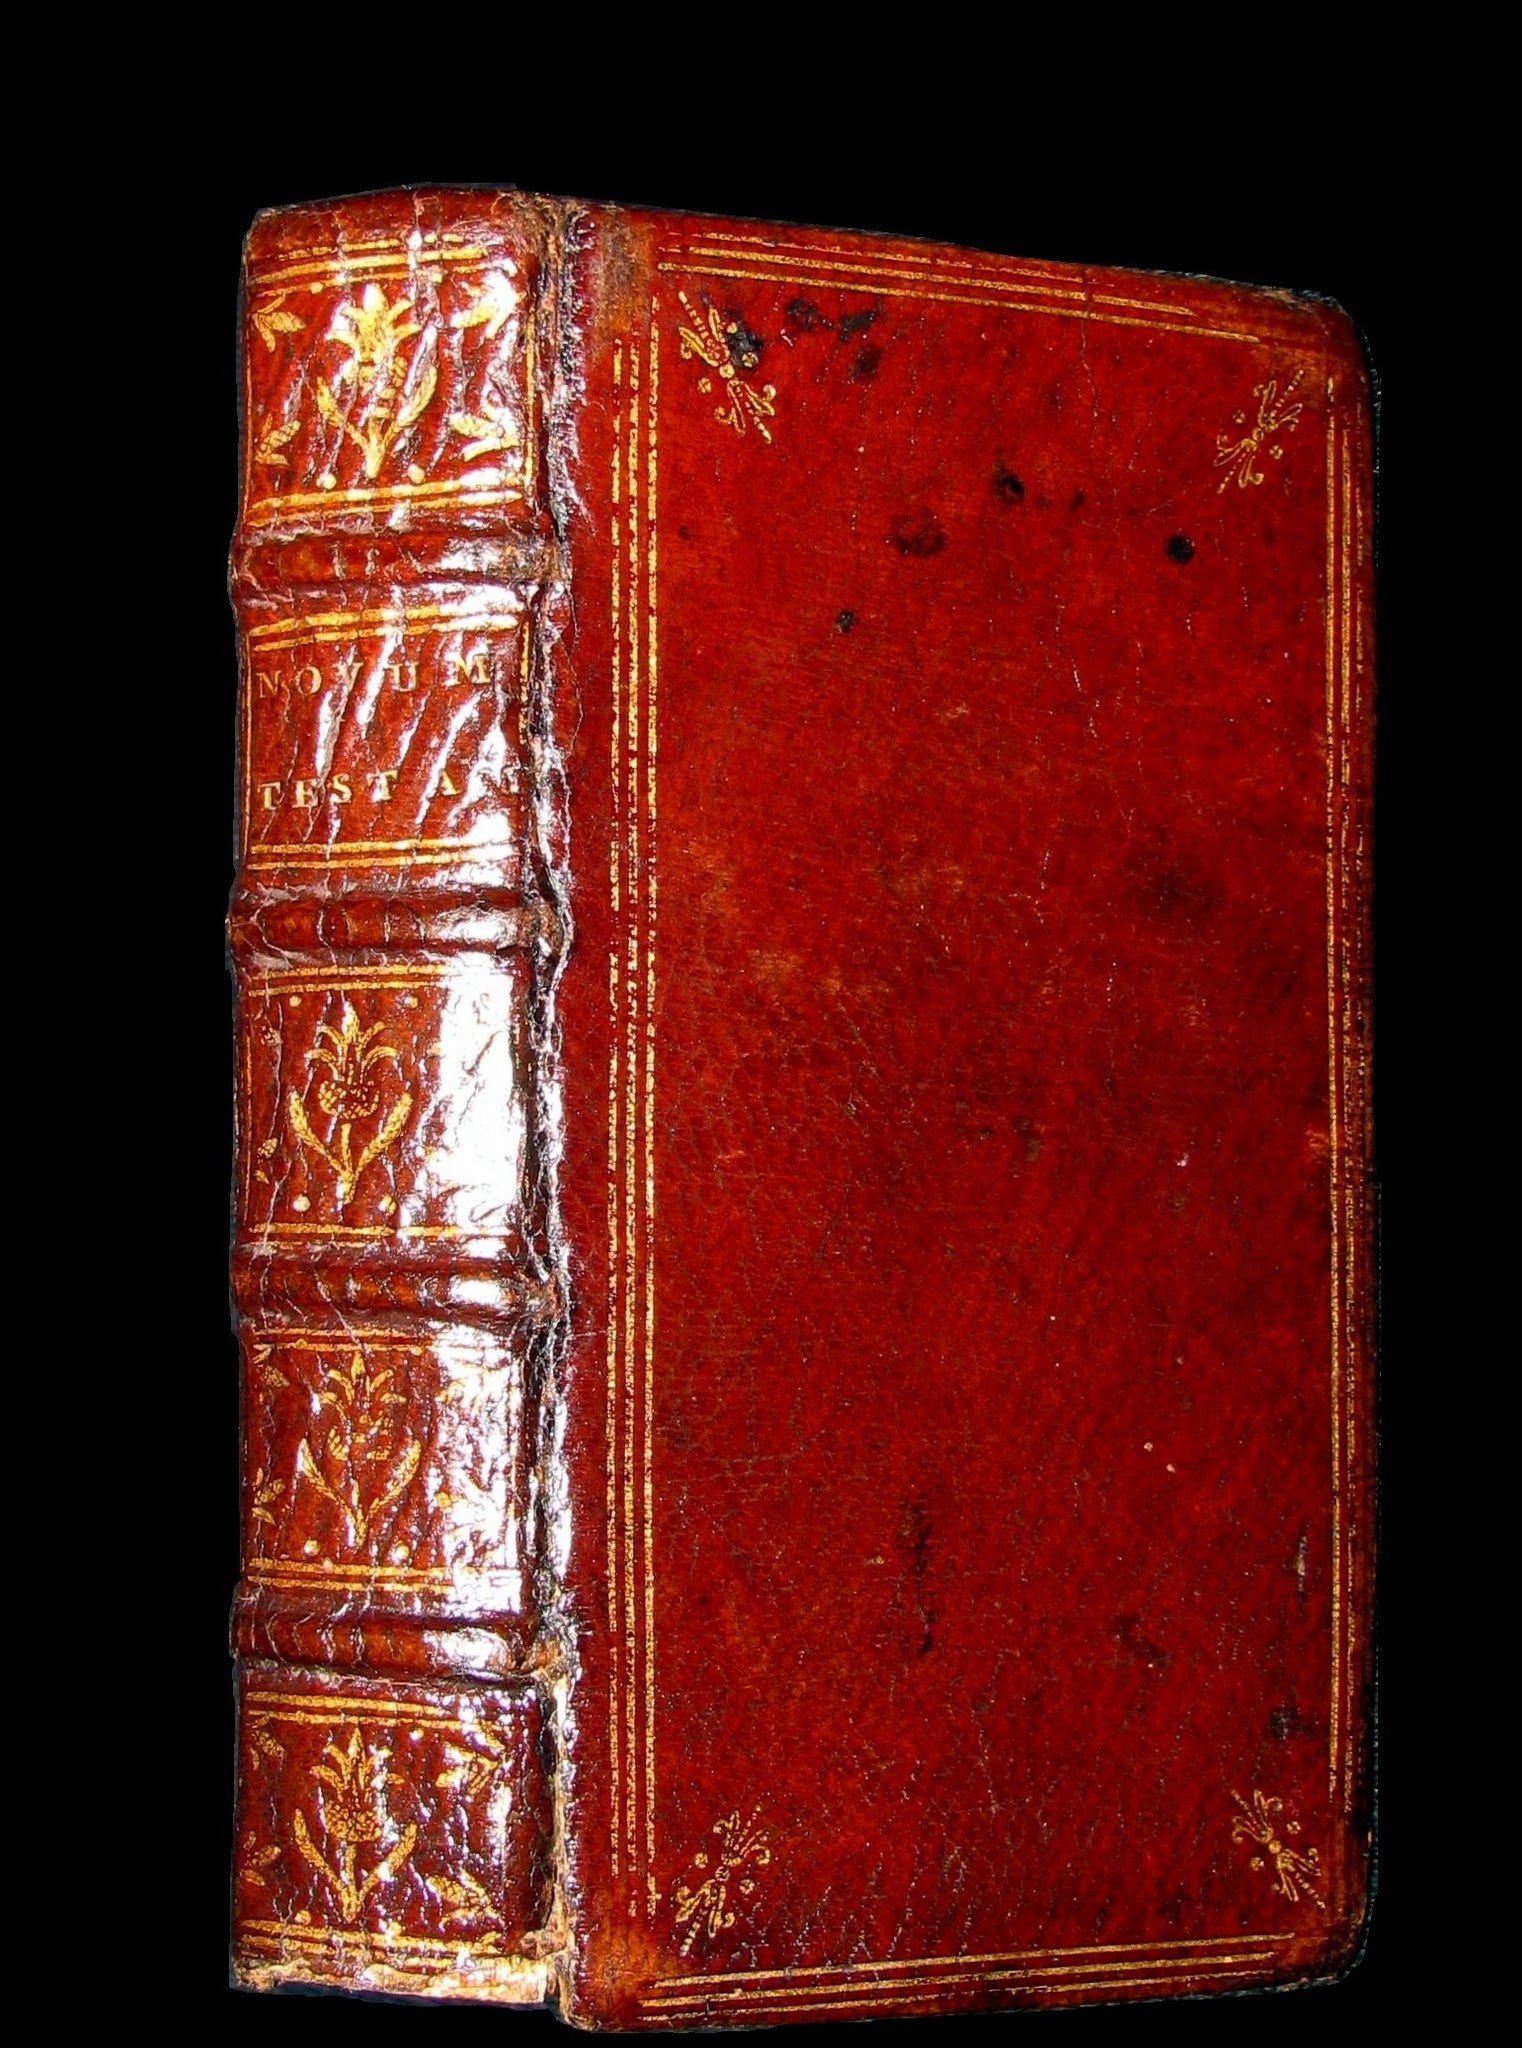 1677 Rare Latin Bible - Novum Testamentum Domini nostri Jesu Christi - New Testament.